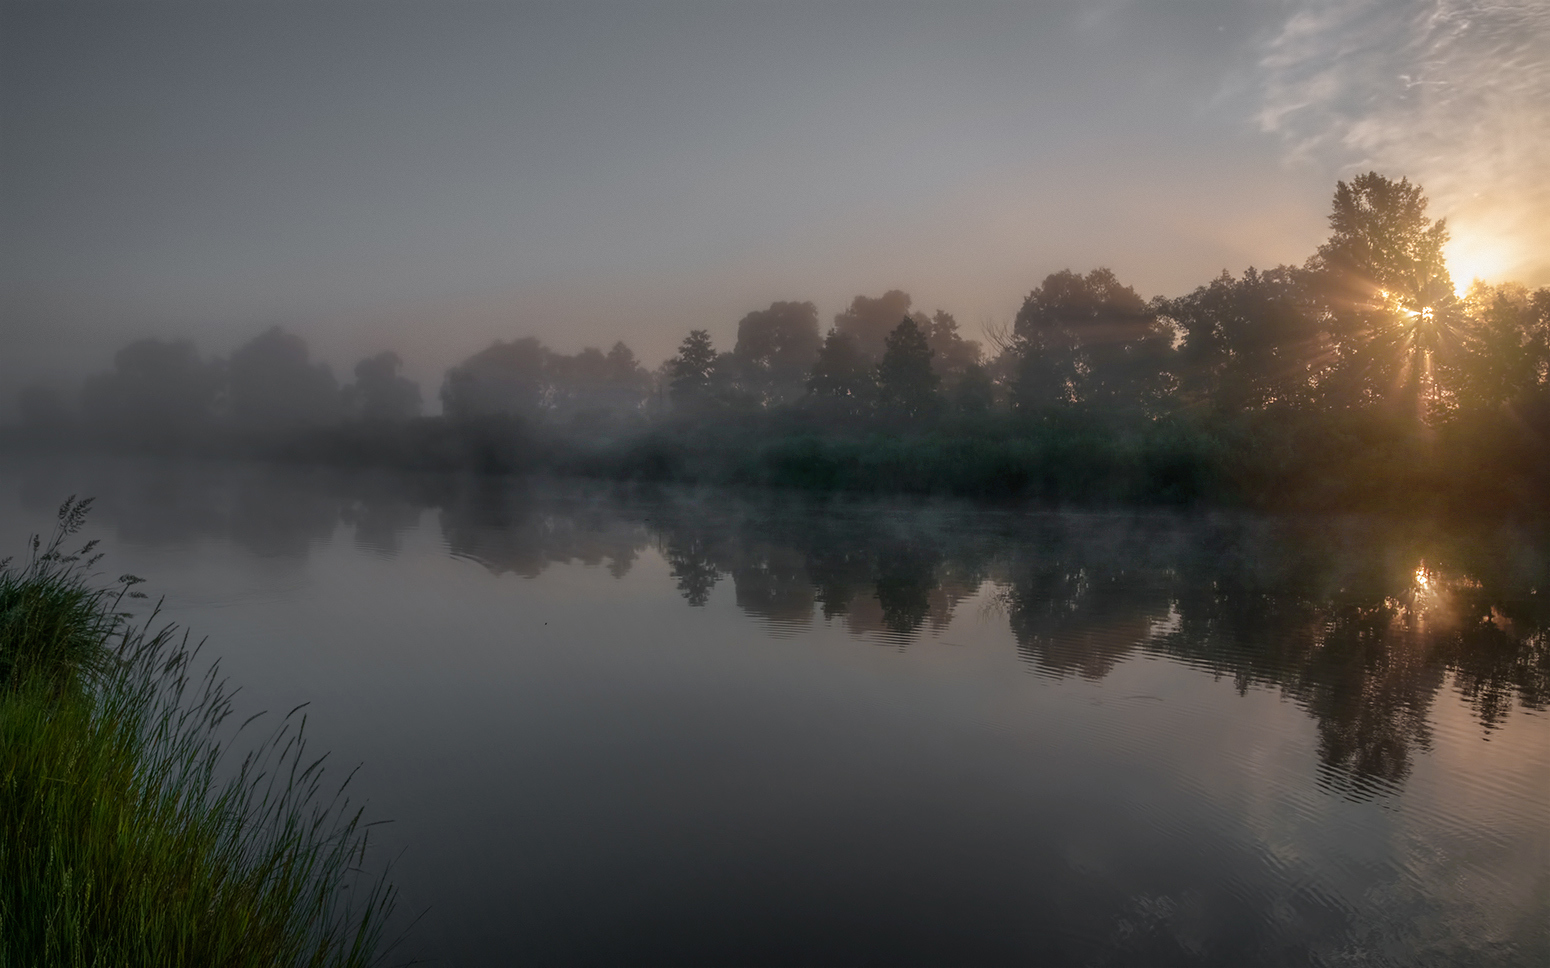 Предрассветная река | Фотограф Александр Шатохин | foto.by фото.бай